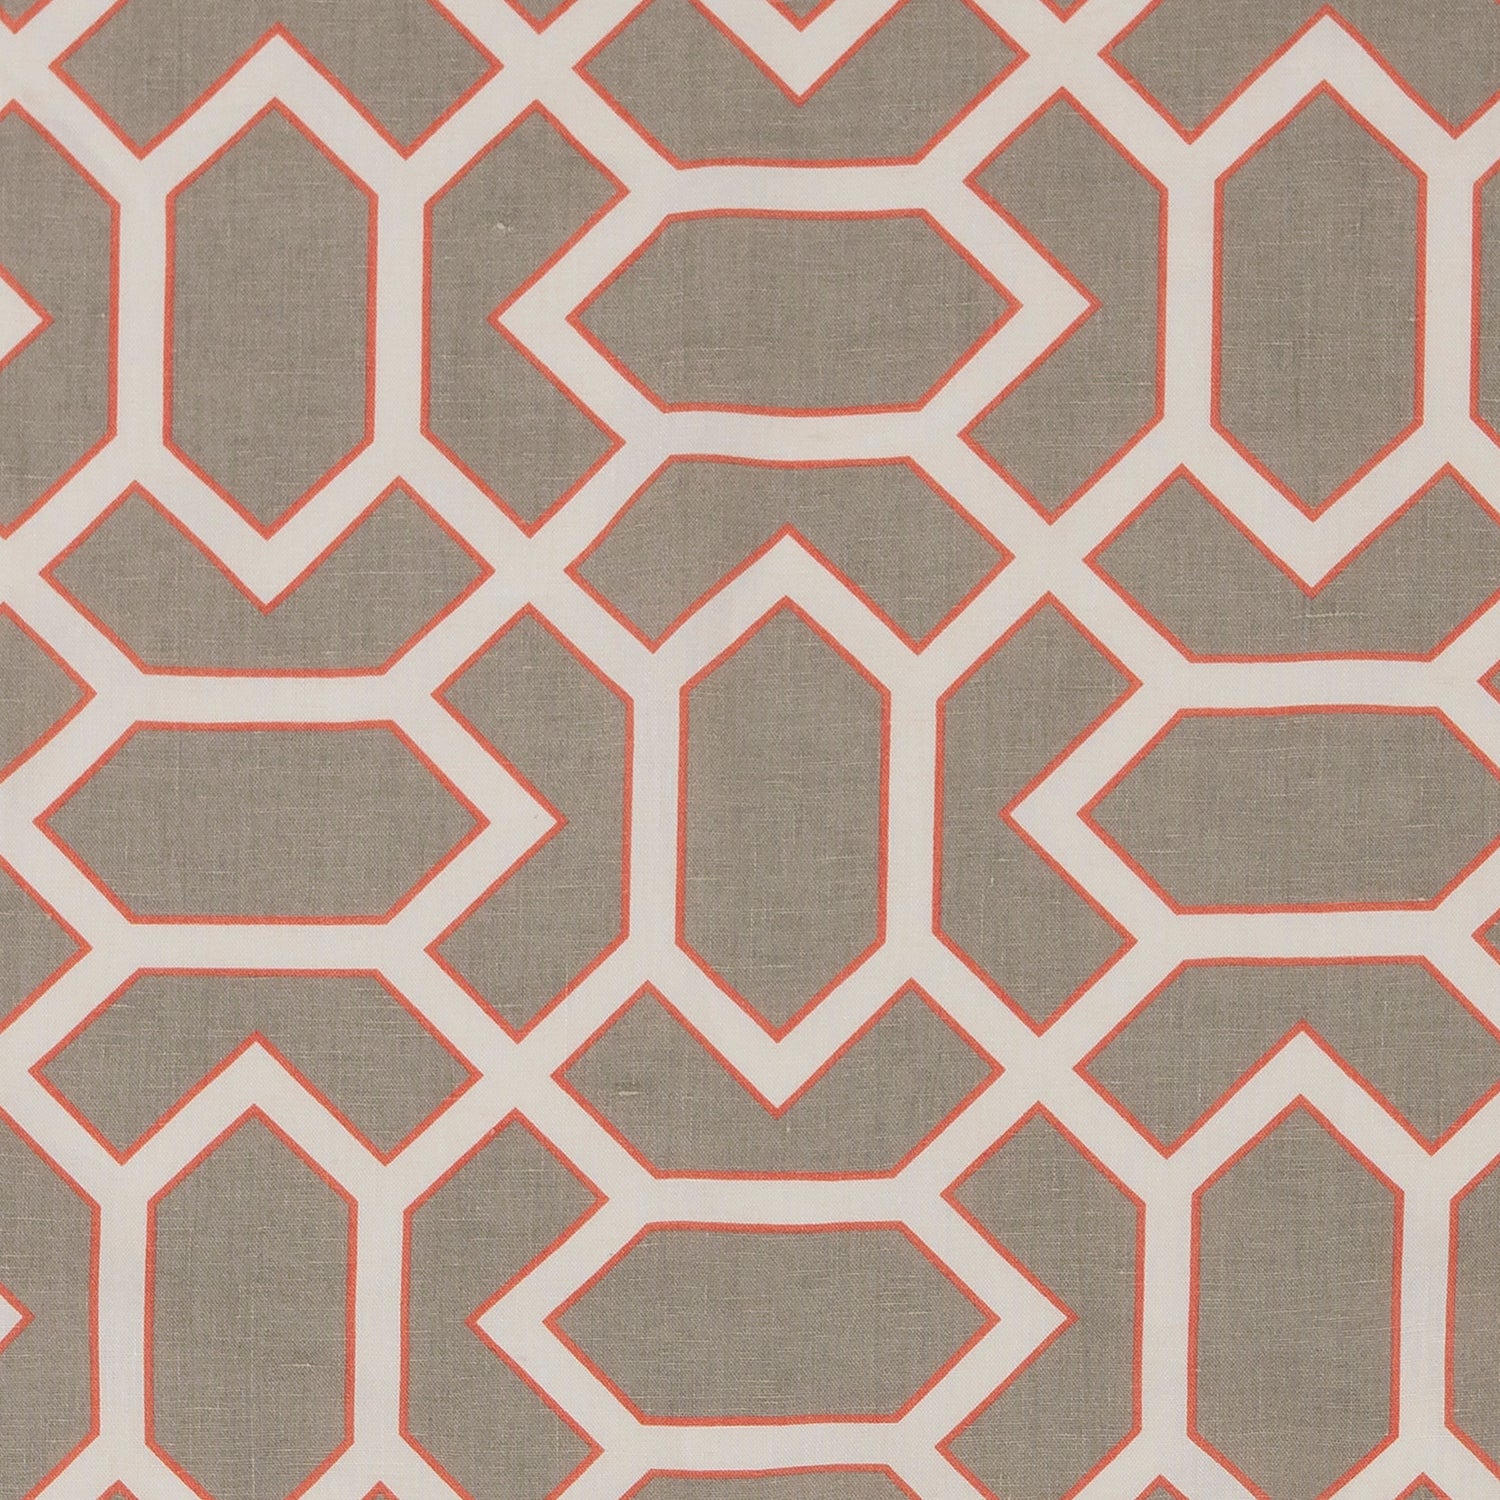 Fabric in a geometric lattice print in cream and coral on a tan field.